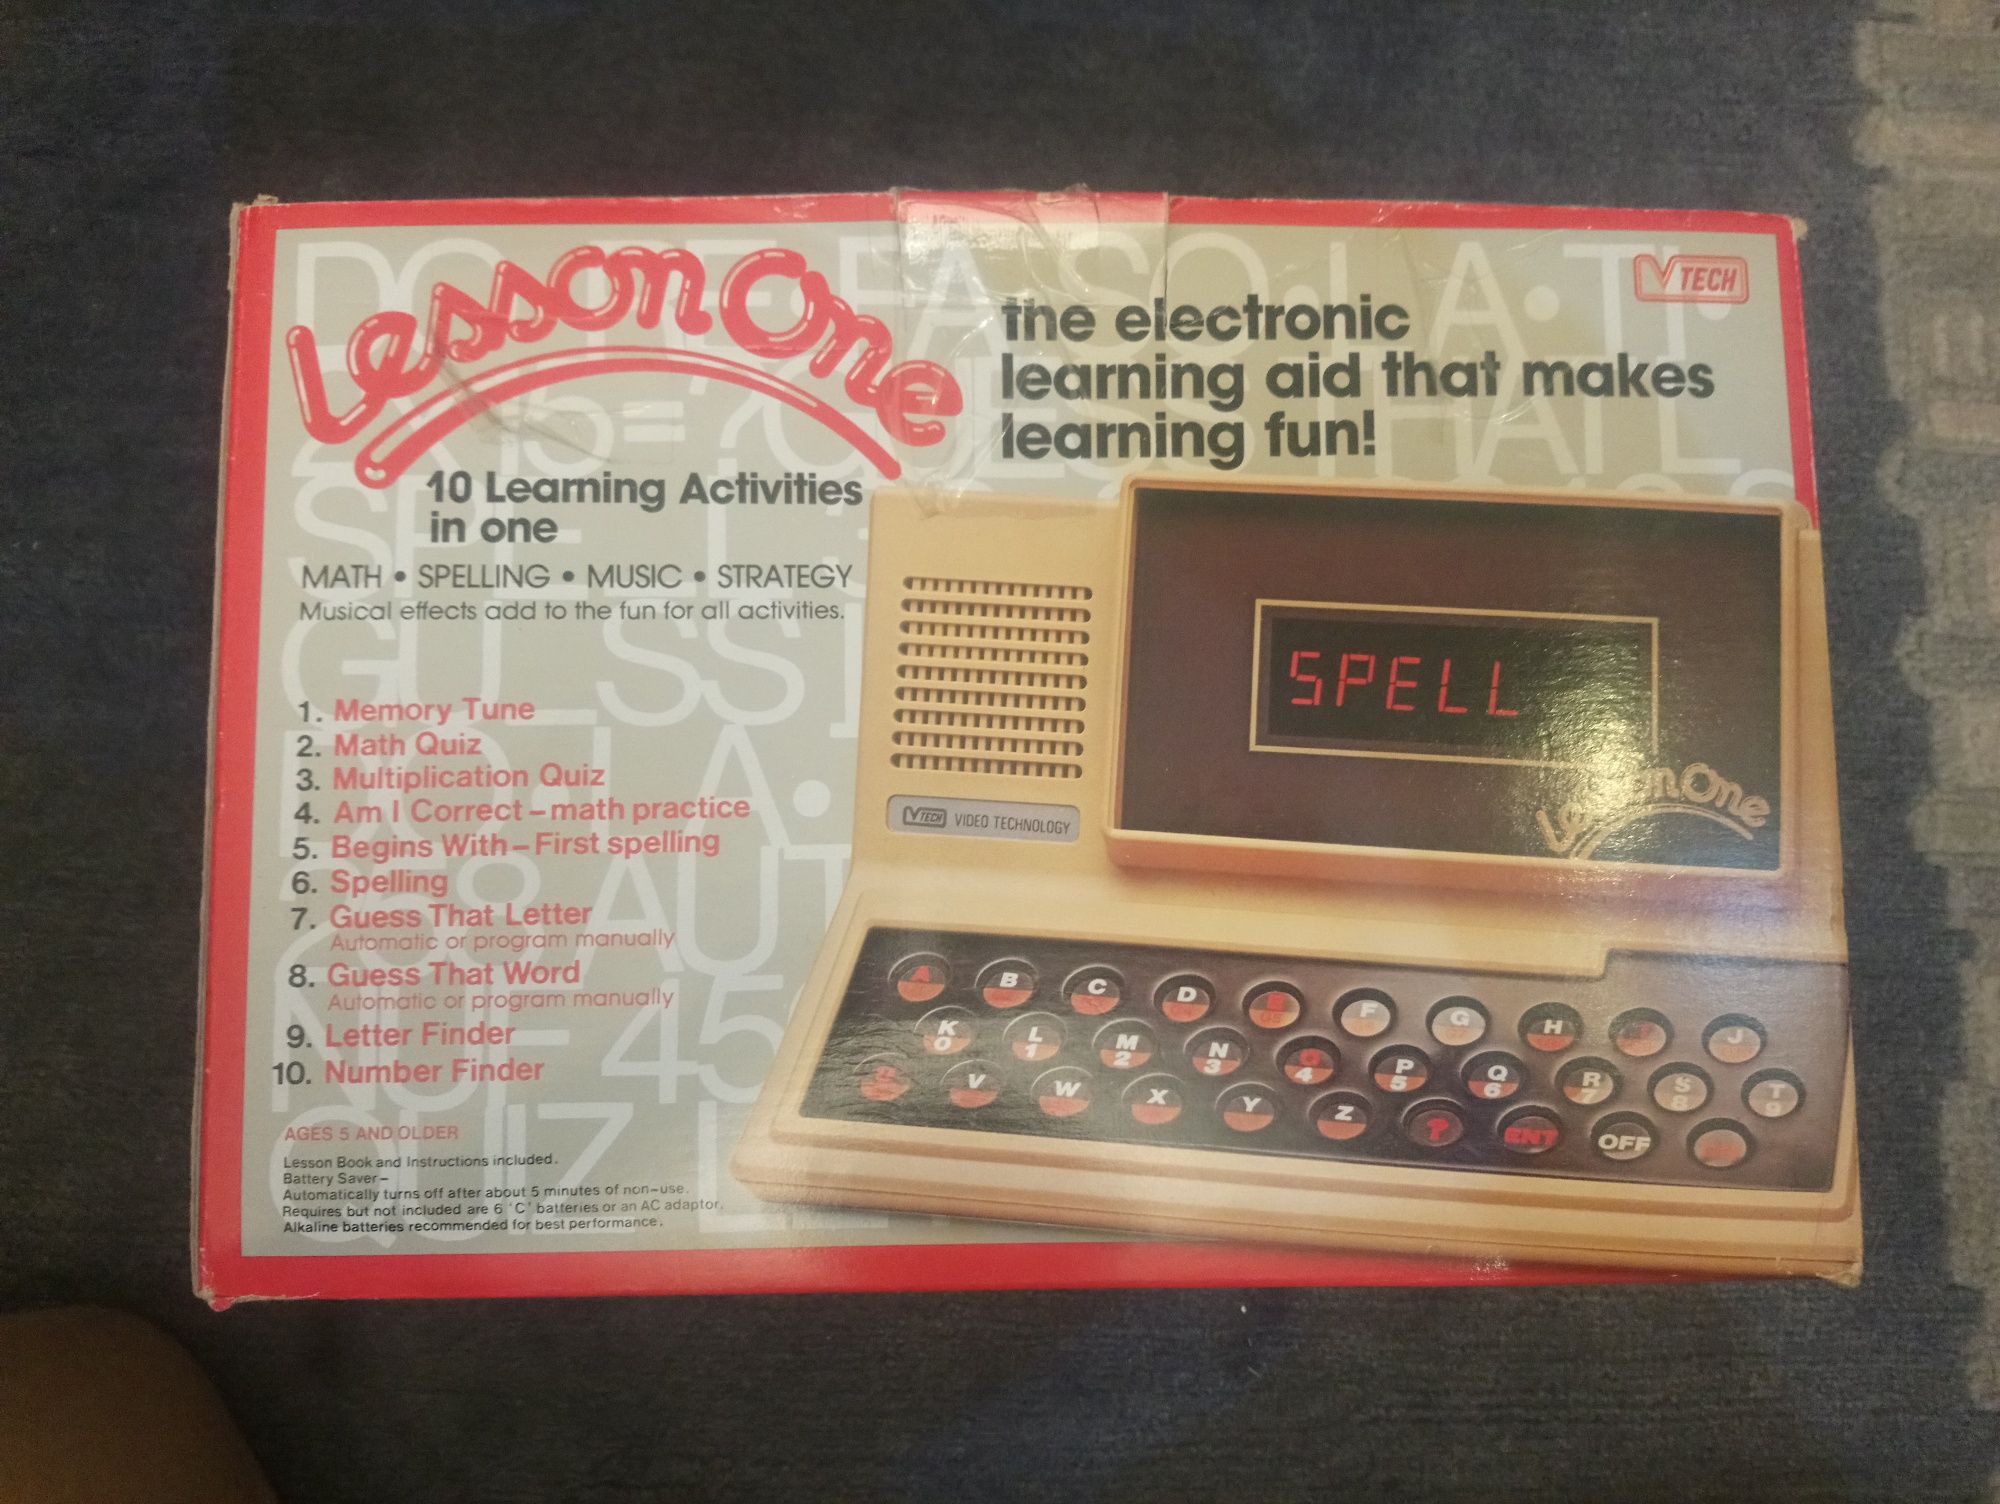 Lesson One: komputer do nauki, 1981